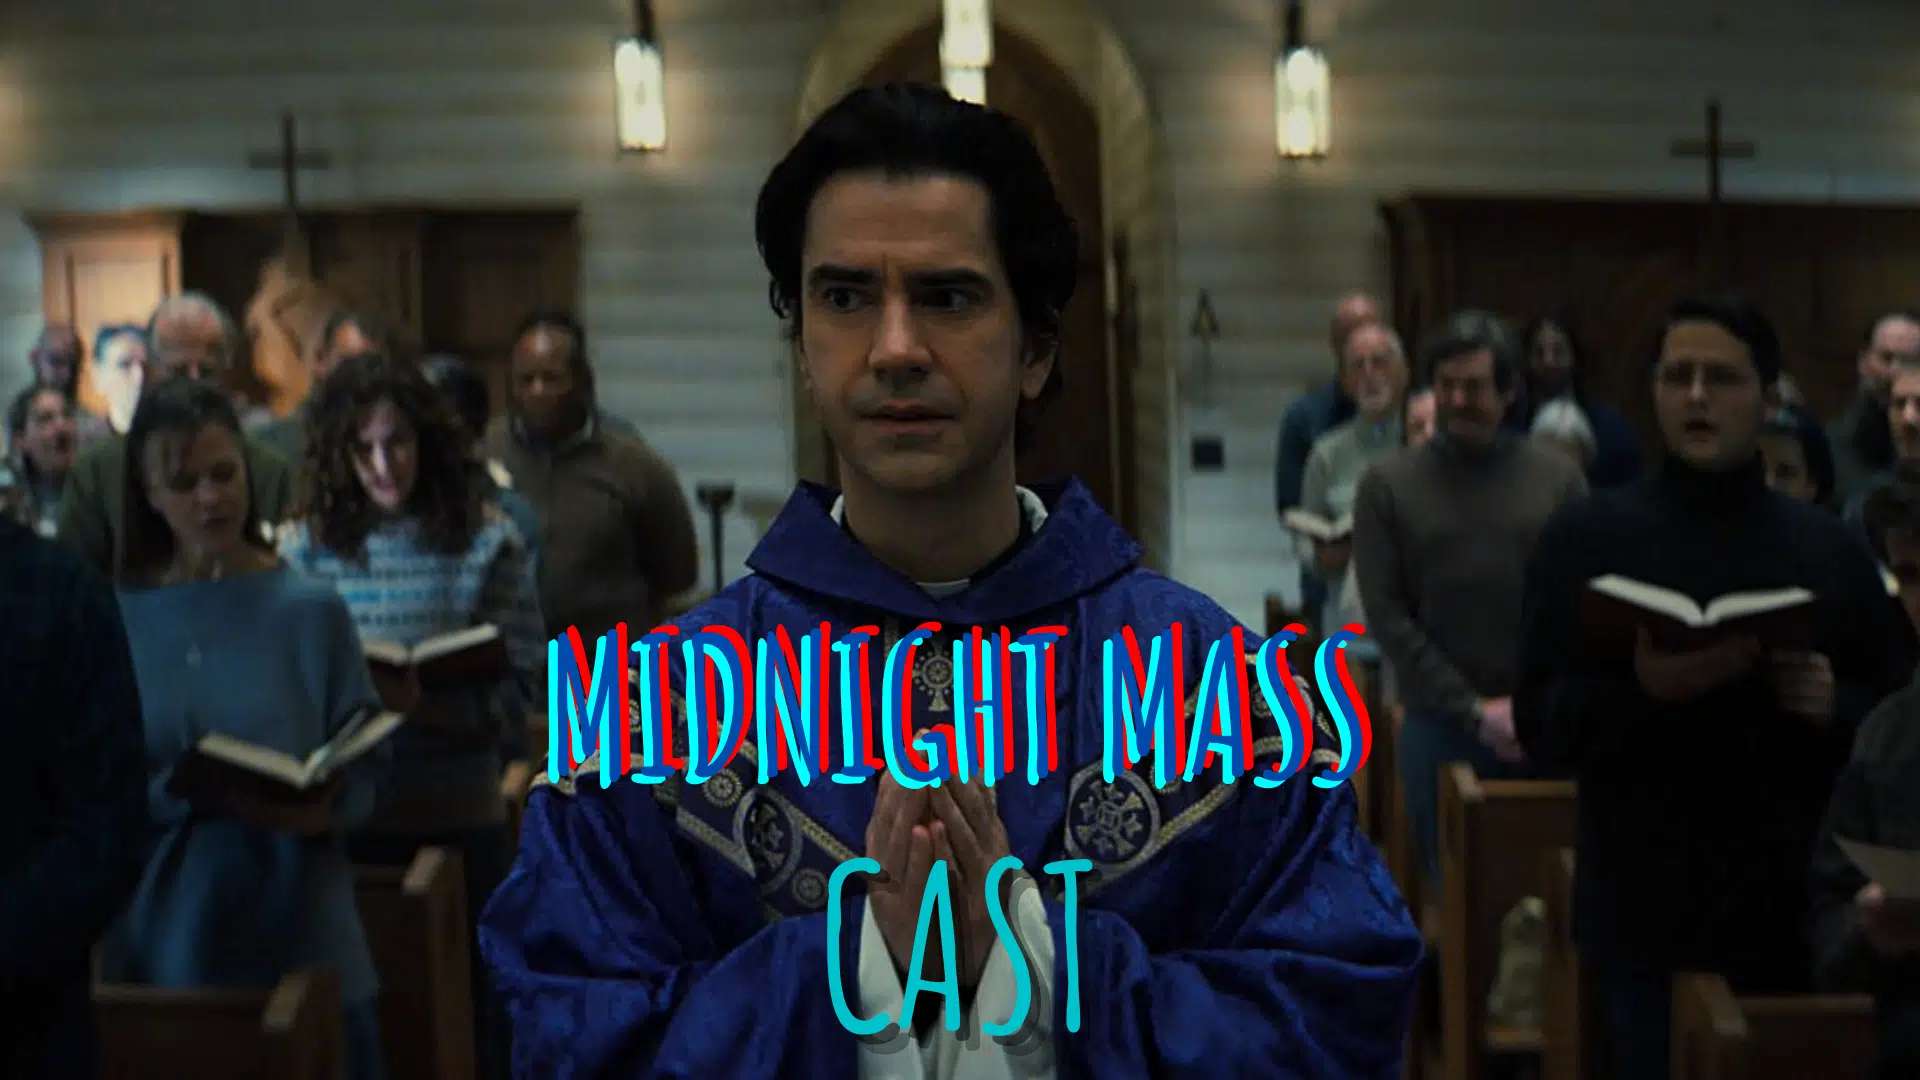 Midnight Mass cast